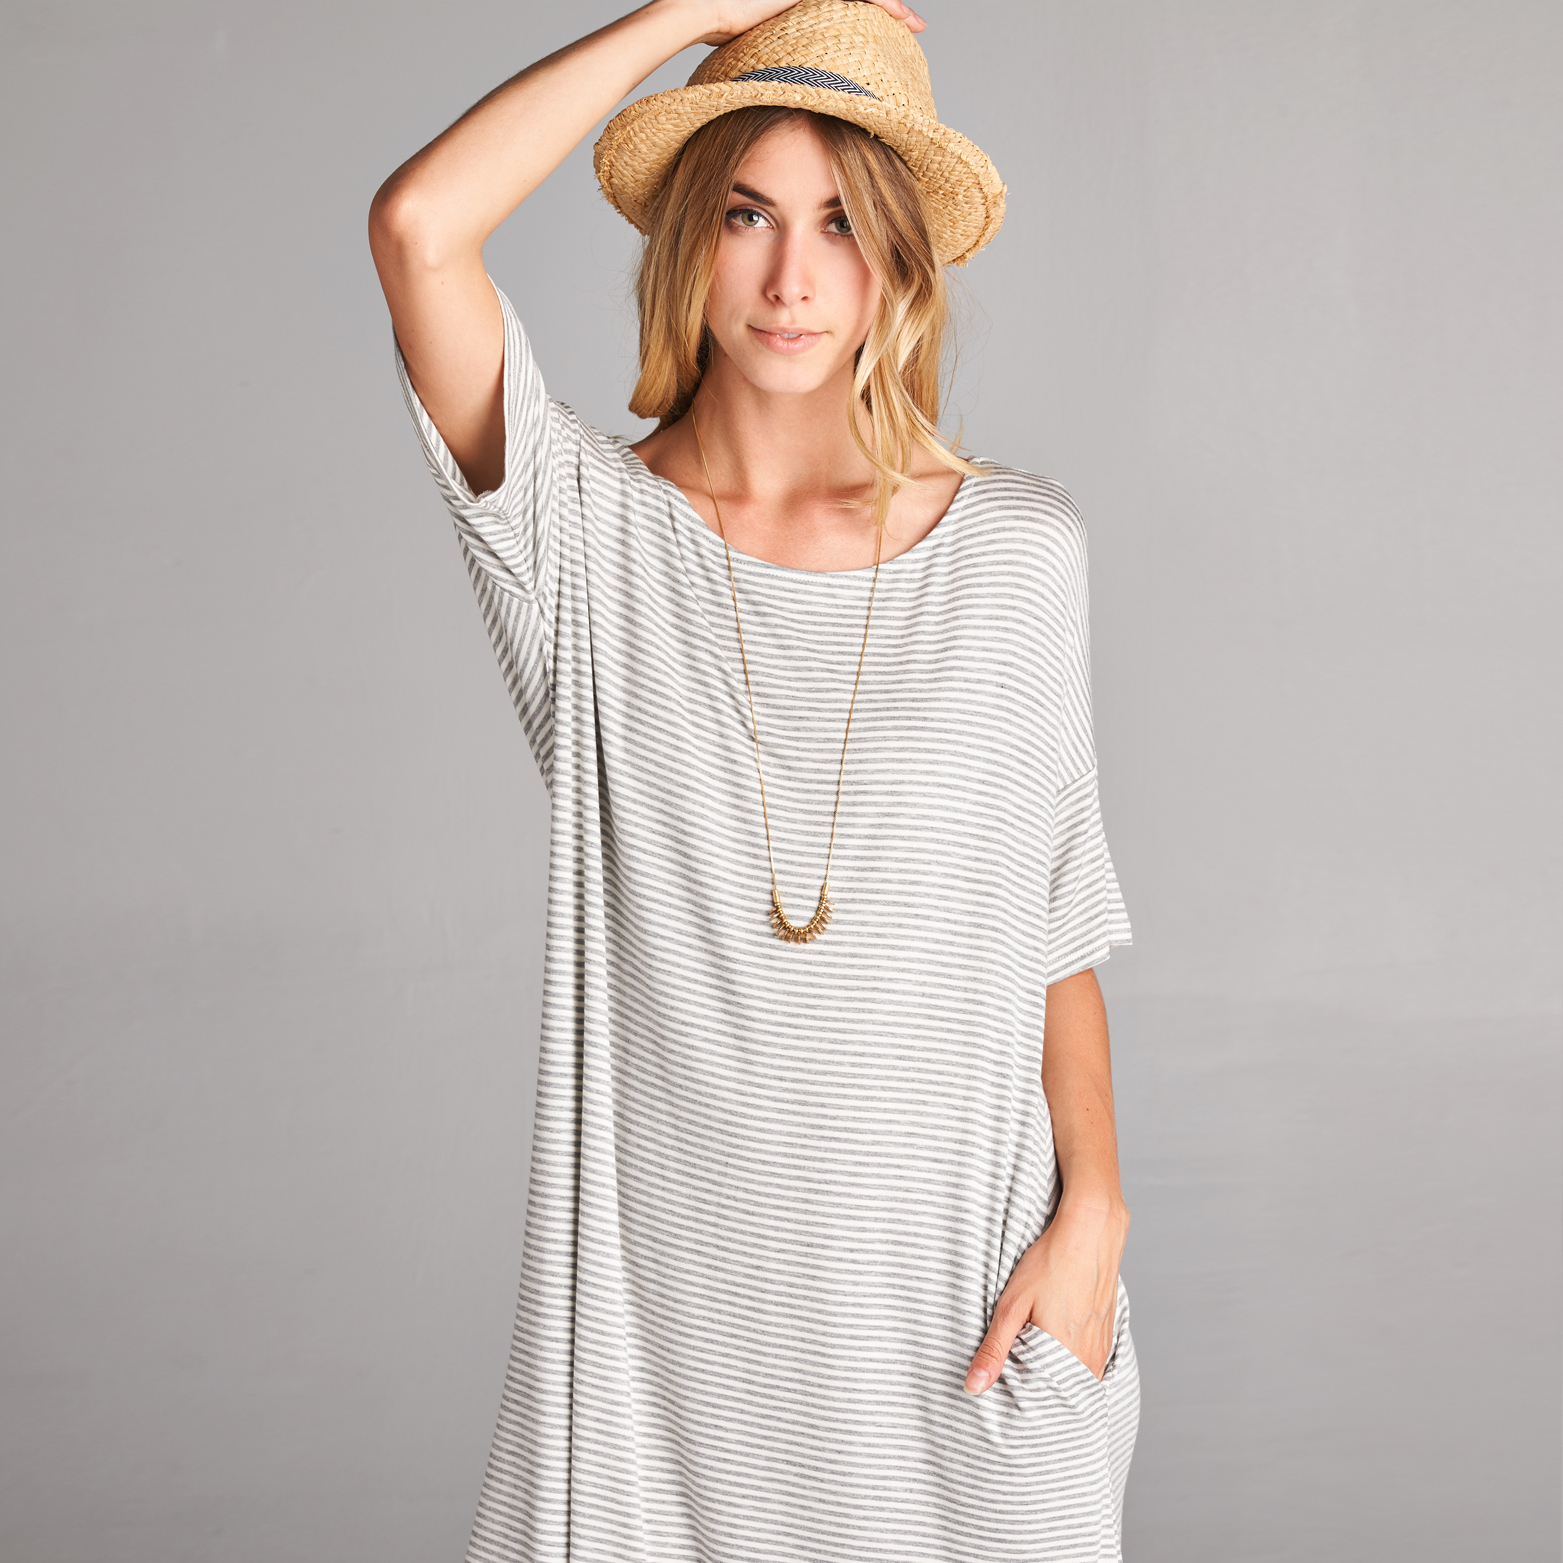 Relaxed Fit Pocket Dress - Grey/White Stripe, Medium (10-12)